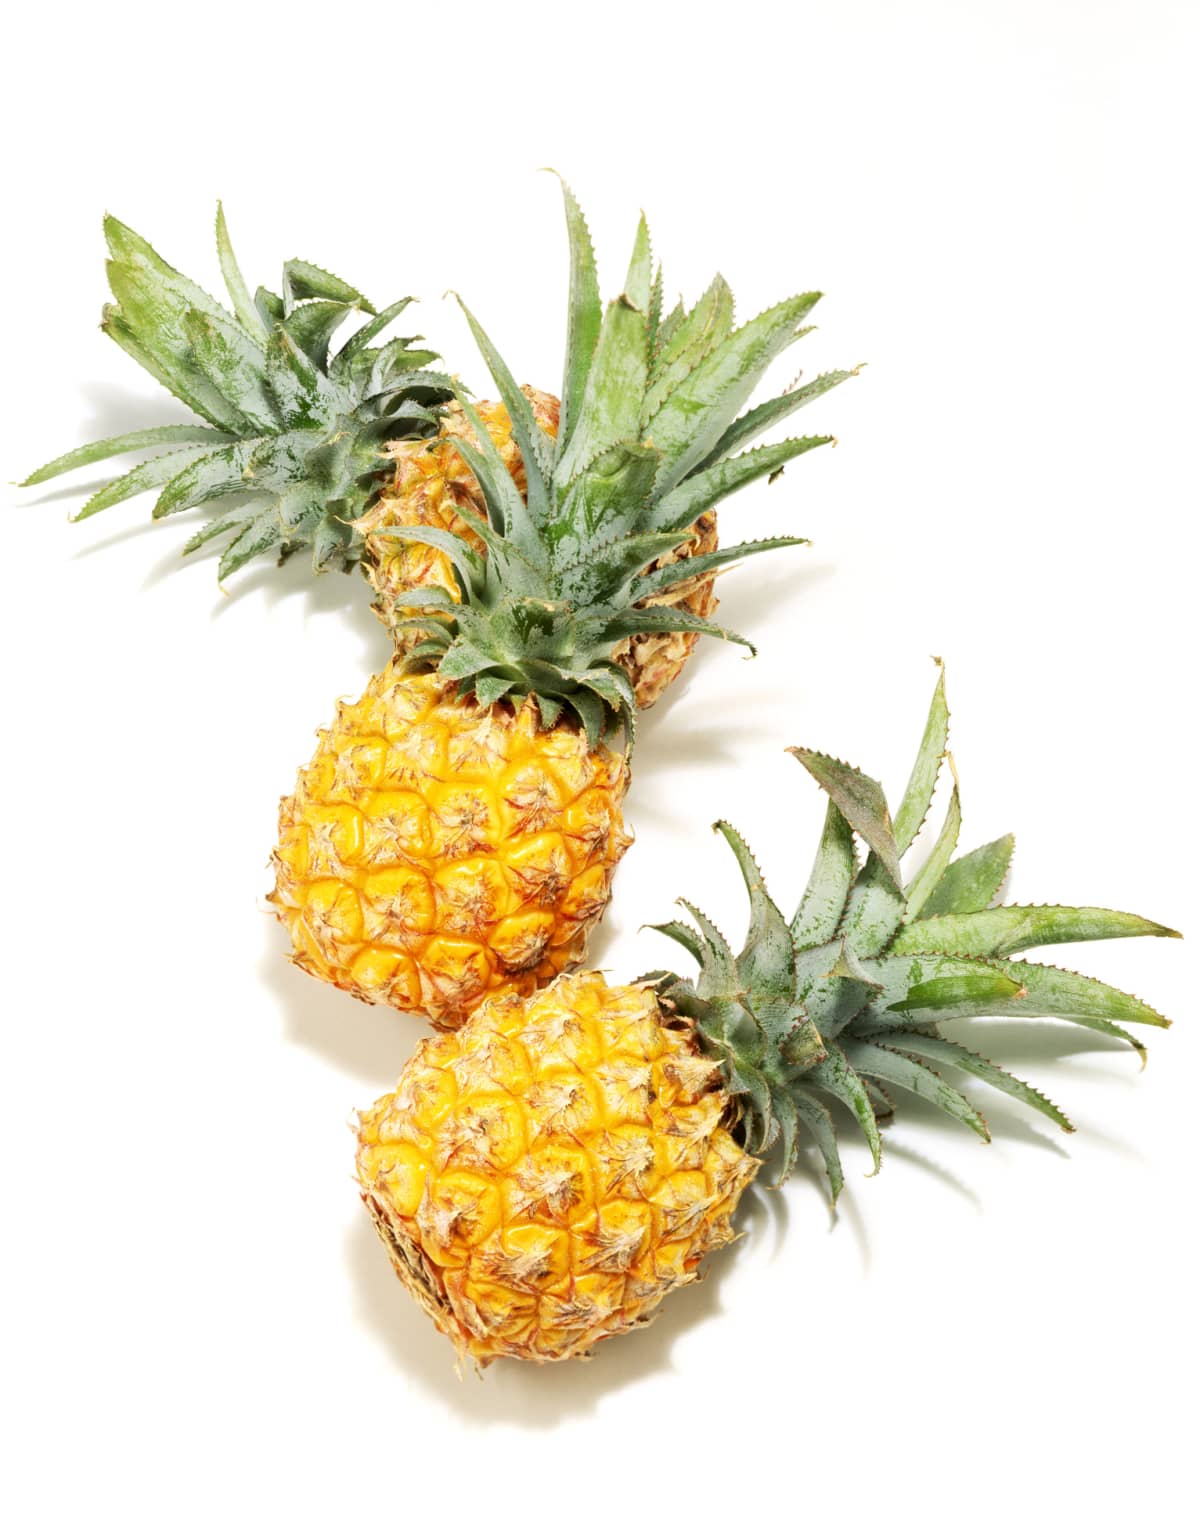 Three whole pineapples